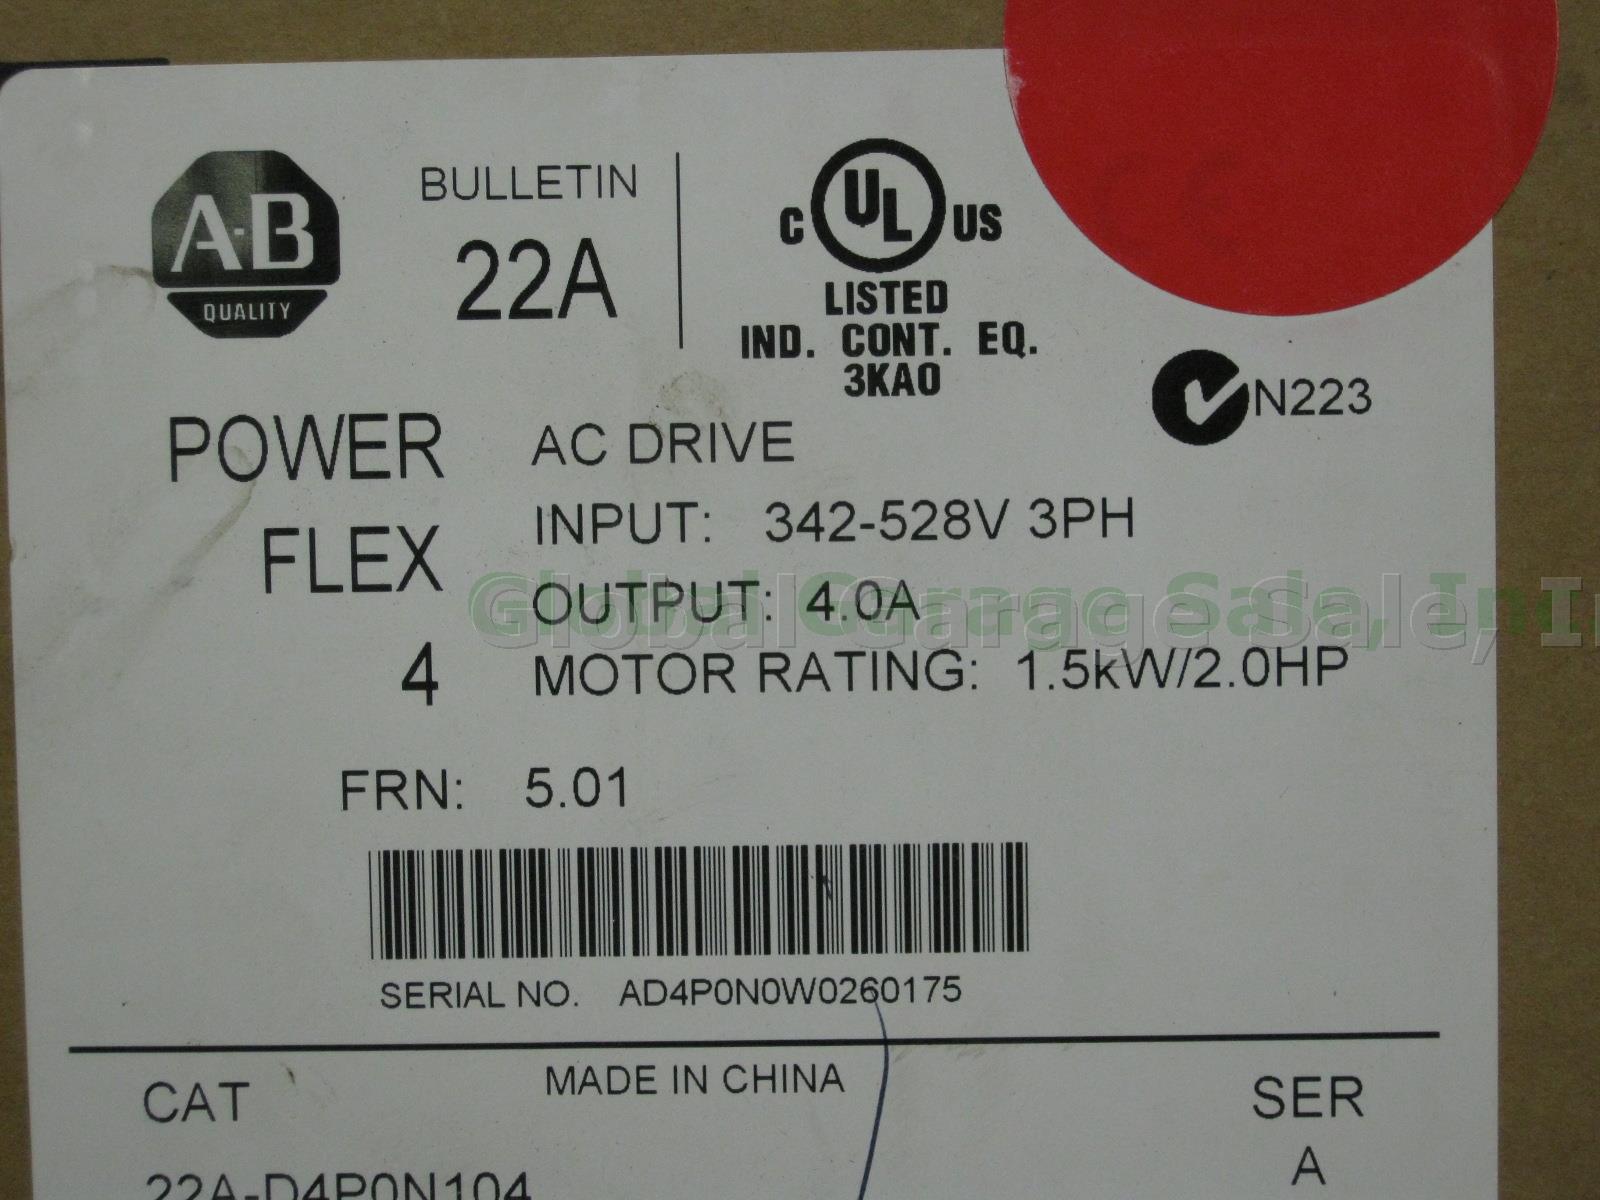 New Allen-Bradley 22A-D4P0N104 PowerFlex 4 AC Drive 342-528V 3PH 4A 1.5kW 2.0HP 7